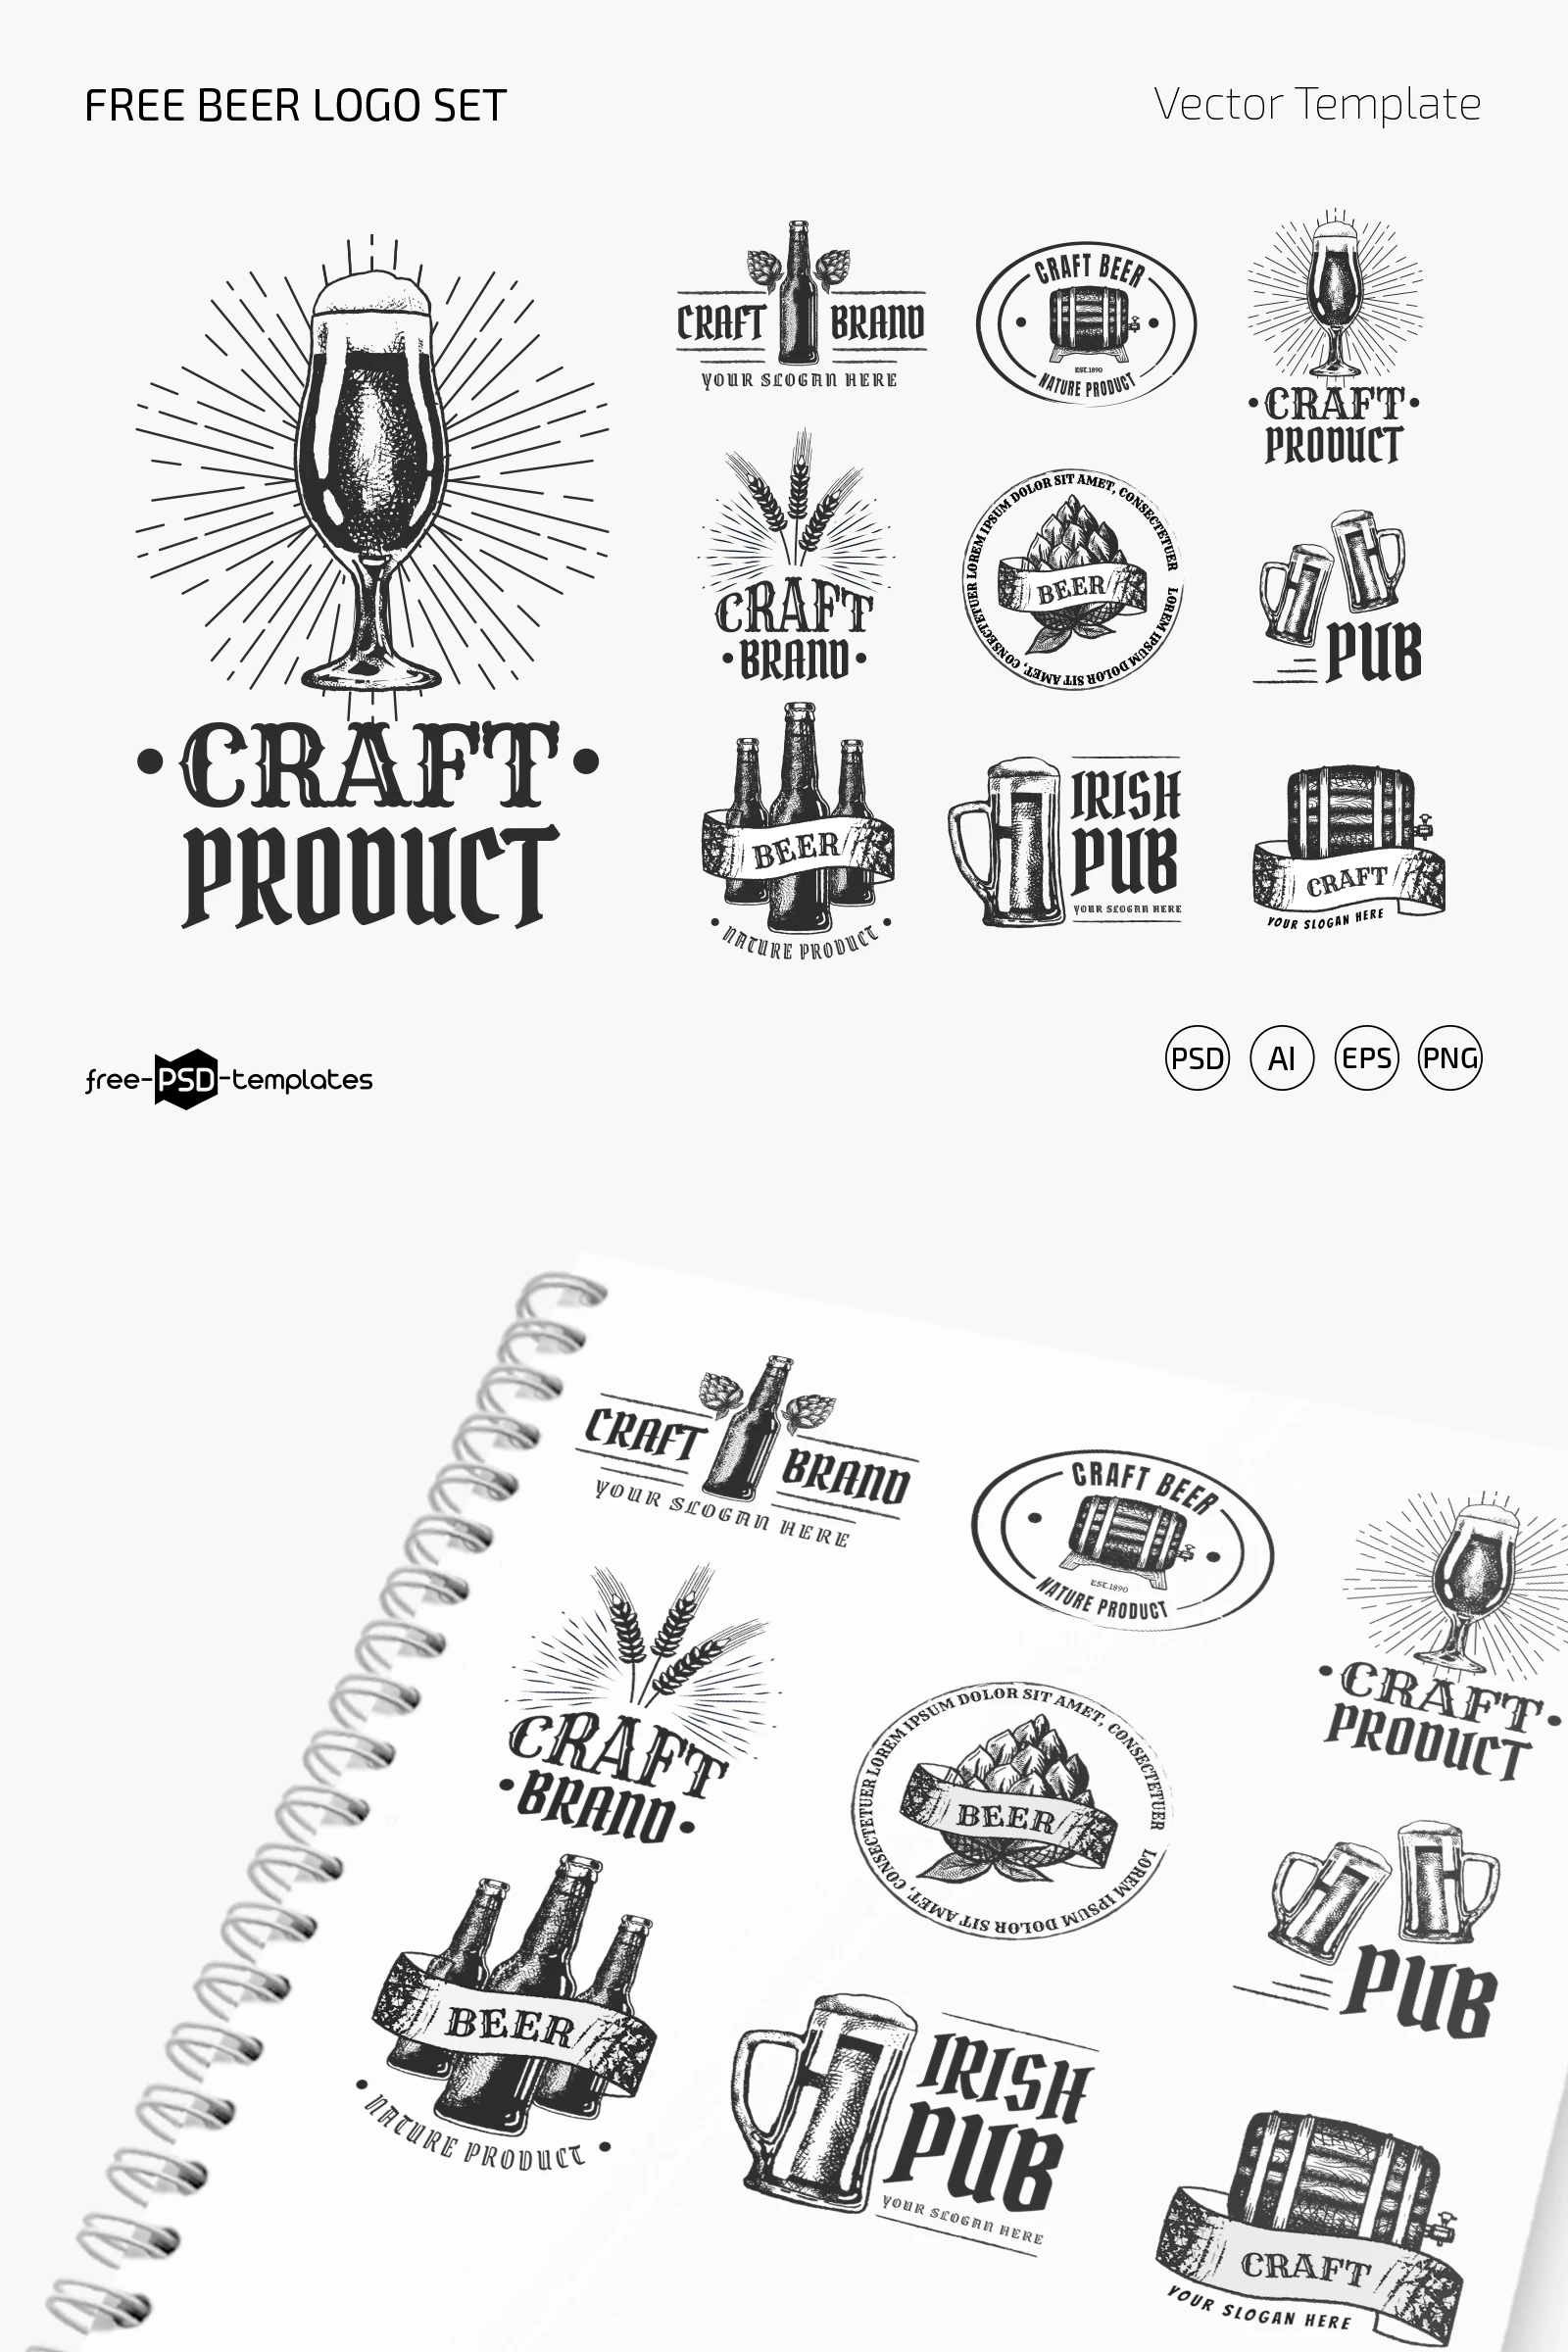 Free Beer Logo Set Template